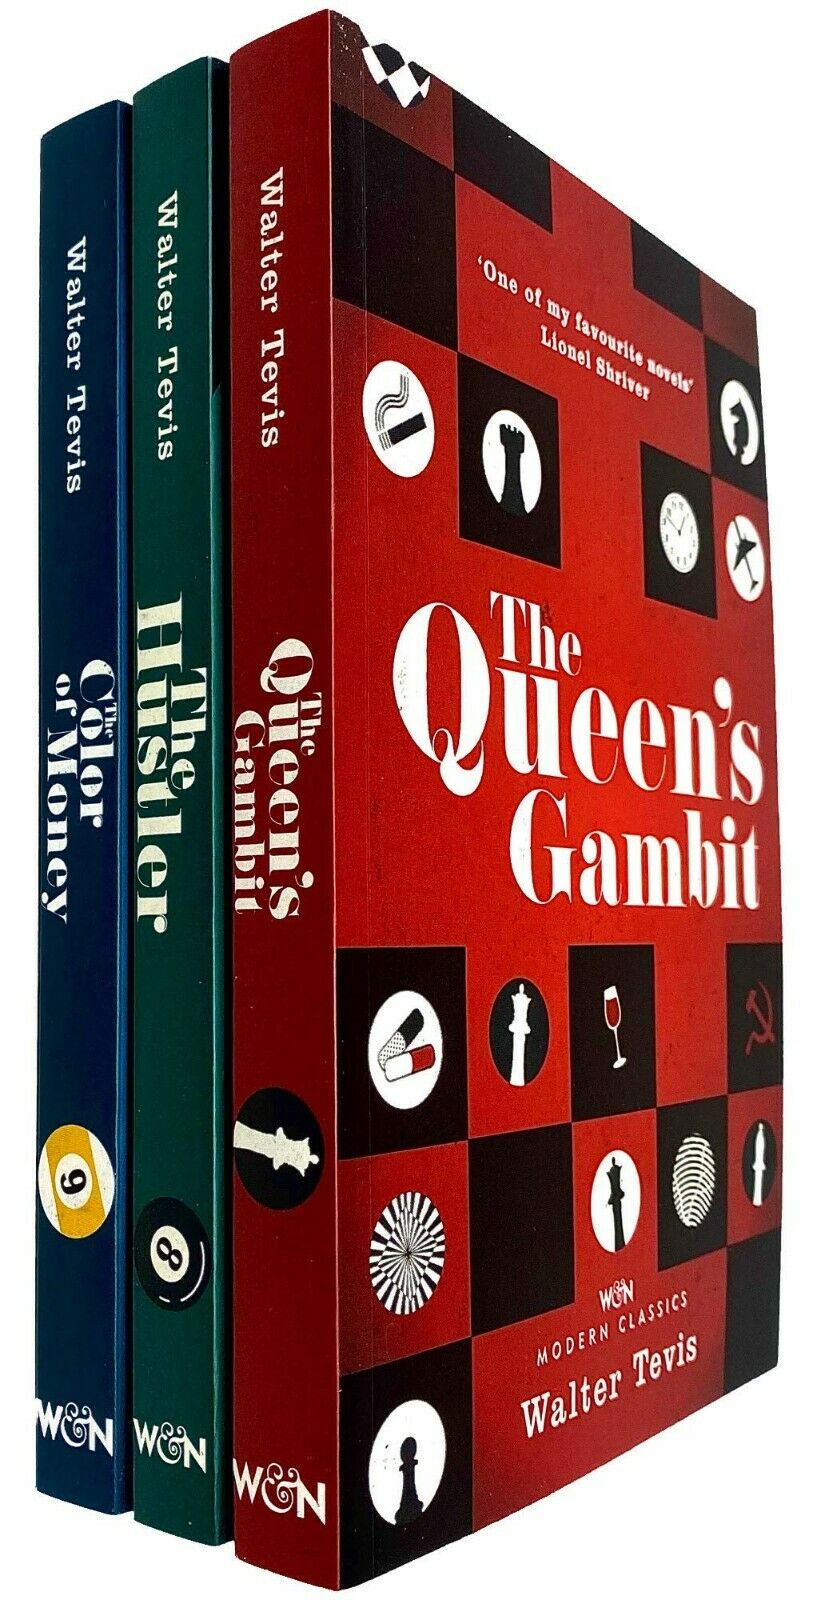 The Queens Gambit Book Gifts & Merchandise for Sale